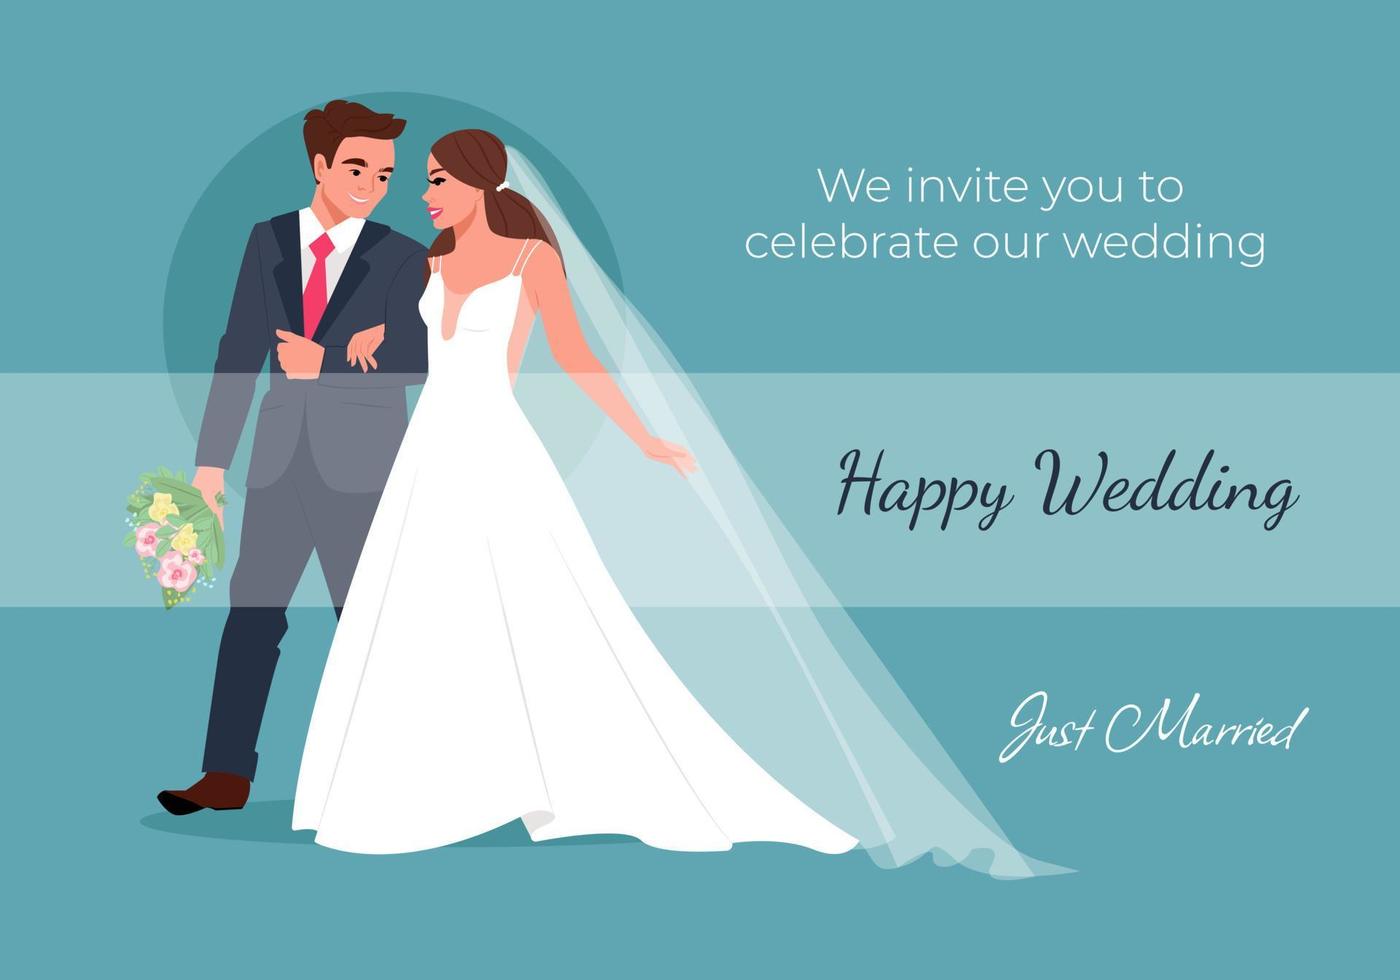 Happy brides go holding hands smiling. Wedding invitation. Vector illustration in flat cartoon style